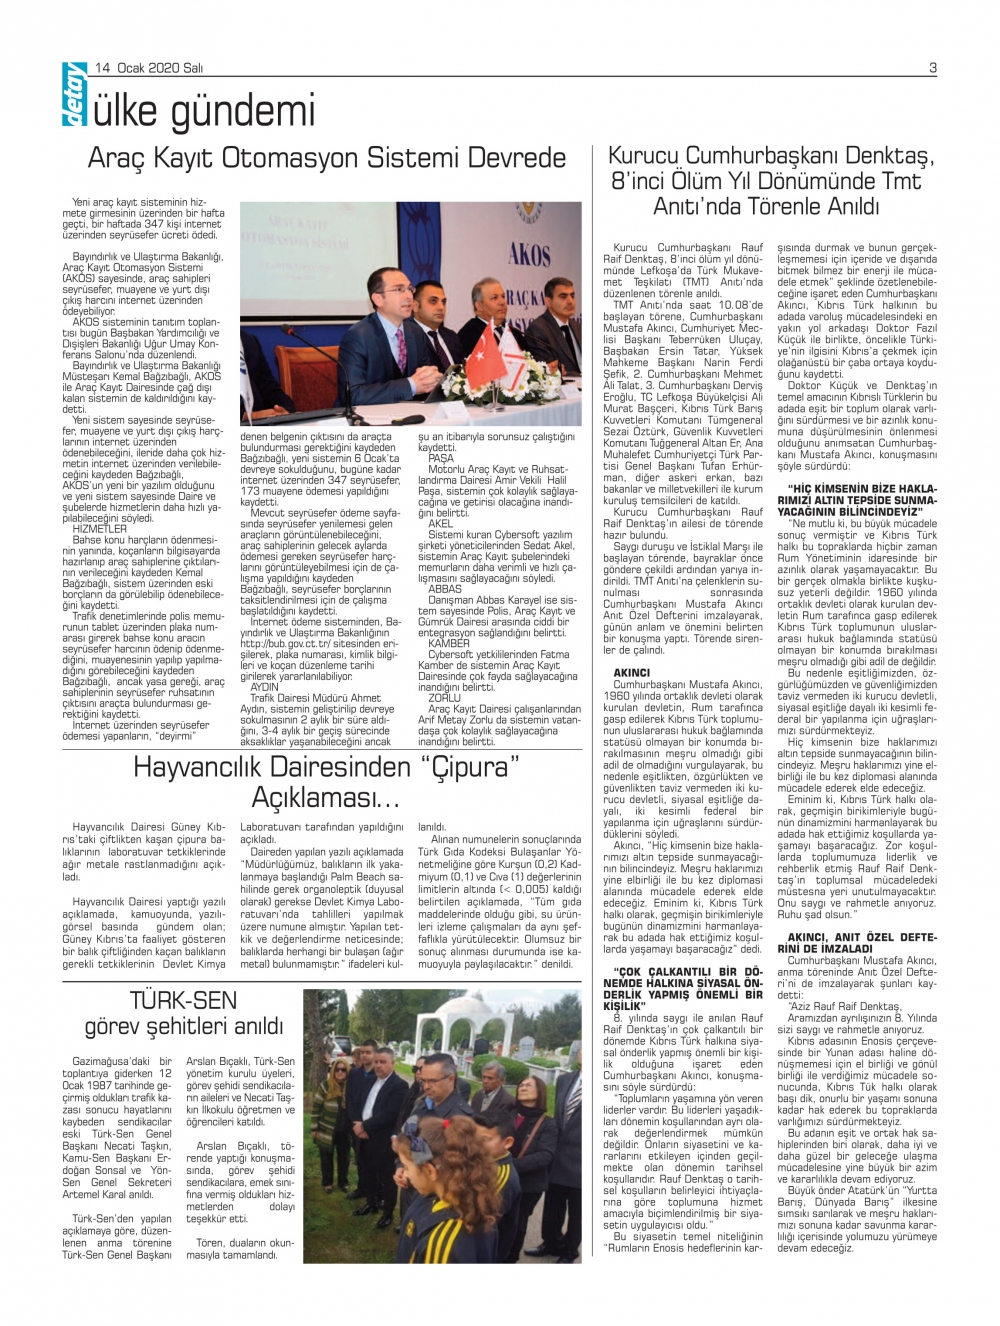 Detay Gazetes 14 Ocak 2020 galerisi resim 3